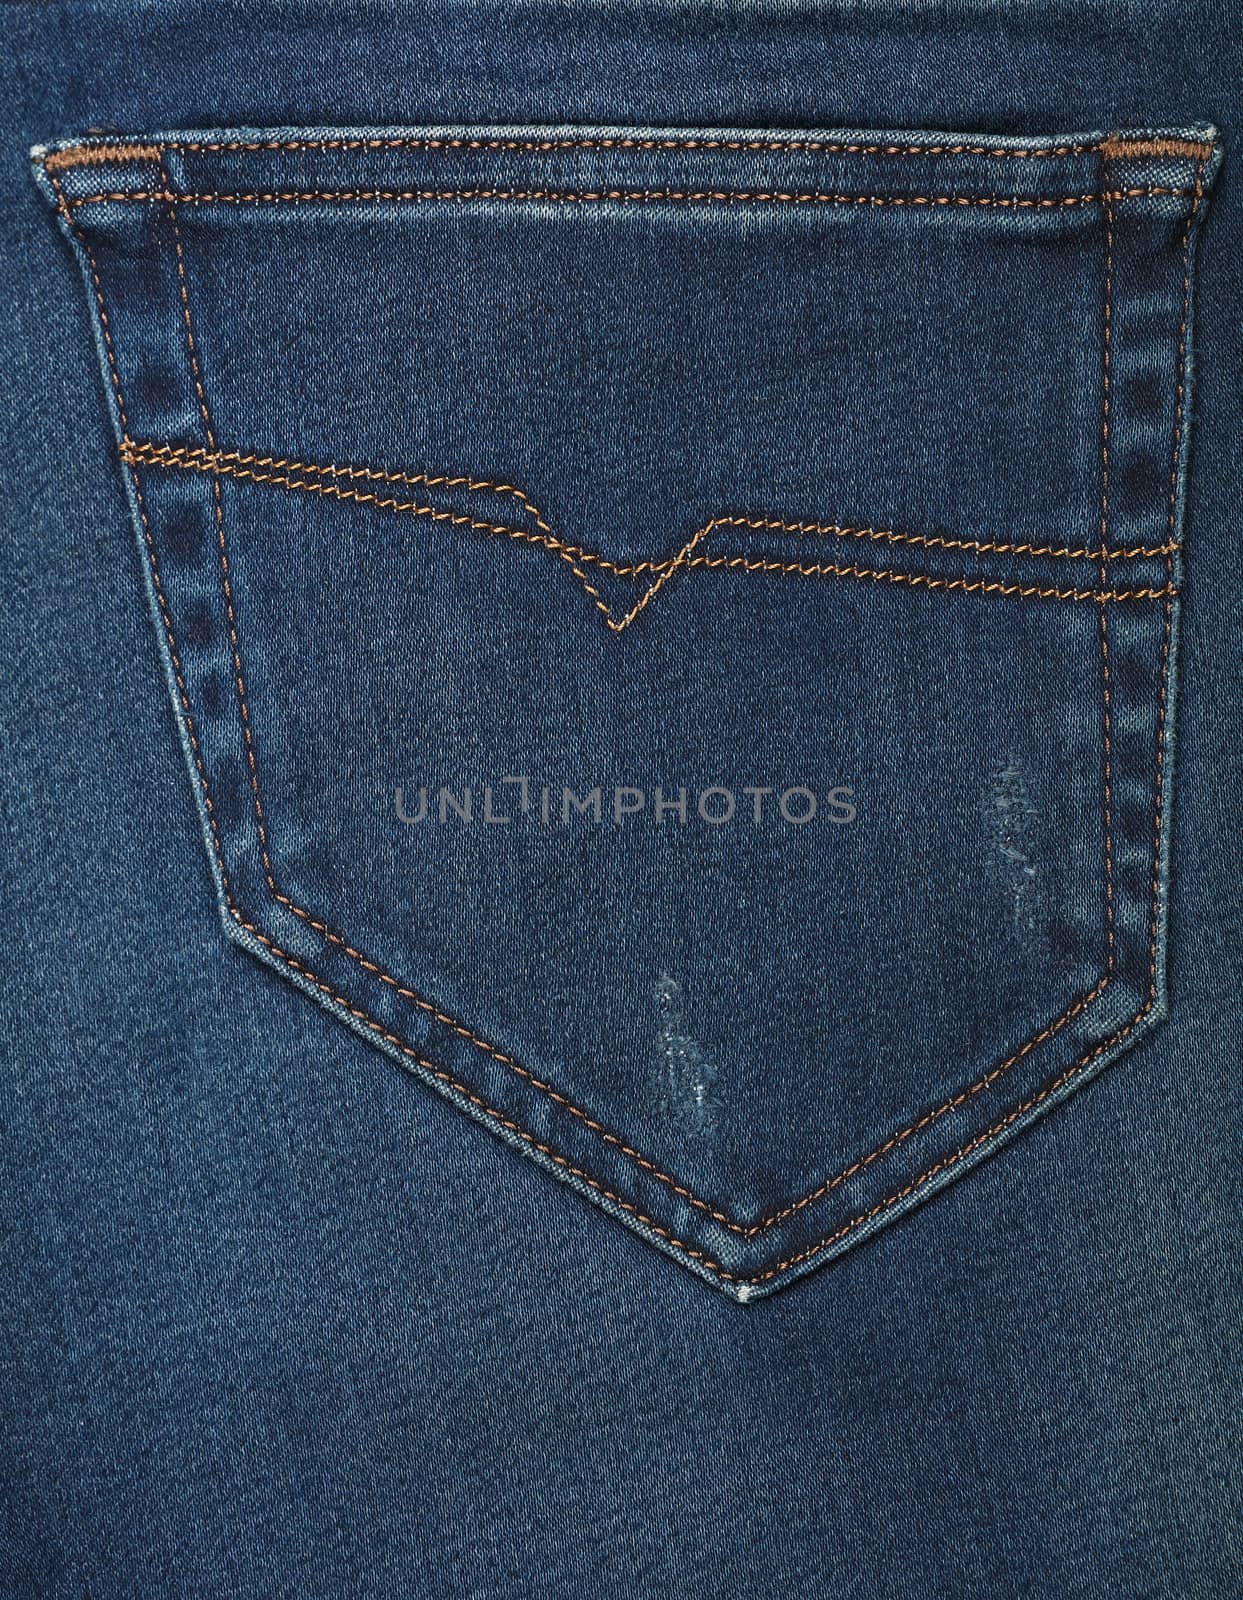 Dark indigo blue washed cotton jeans denim texture background with back pocket, close up